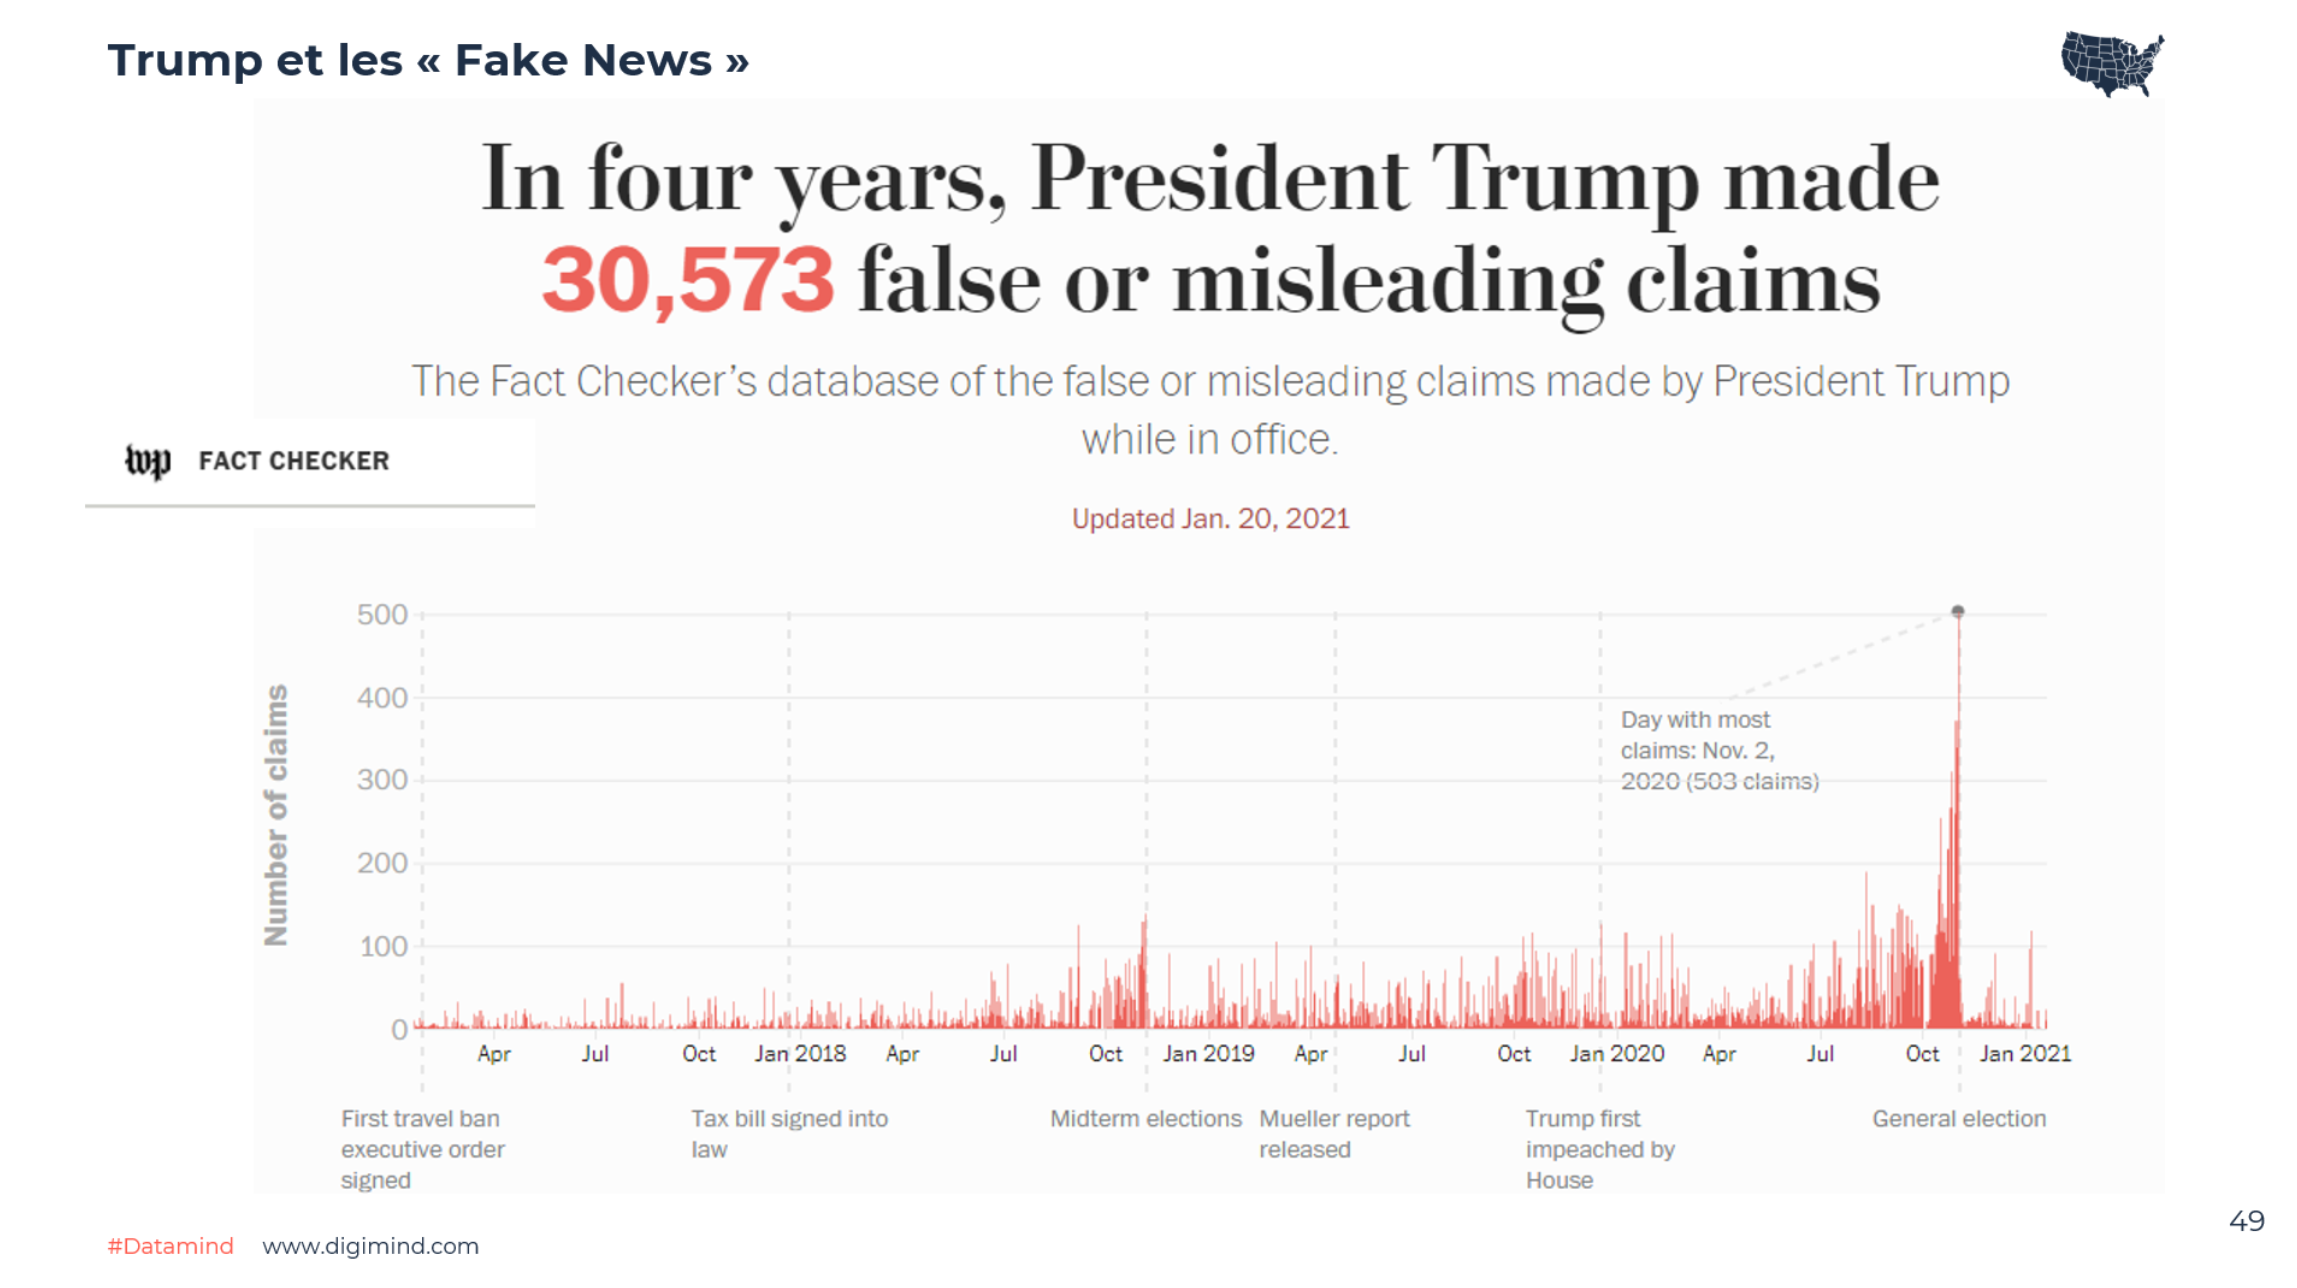 Trump et les « Fake News » - Washington Post Fact Checker’s database